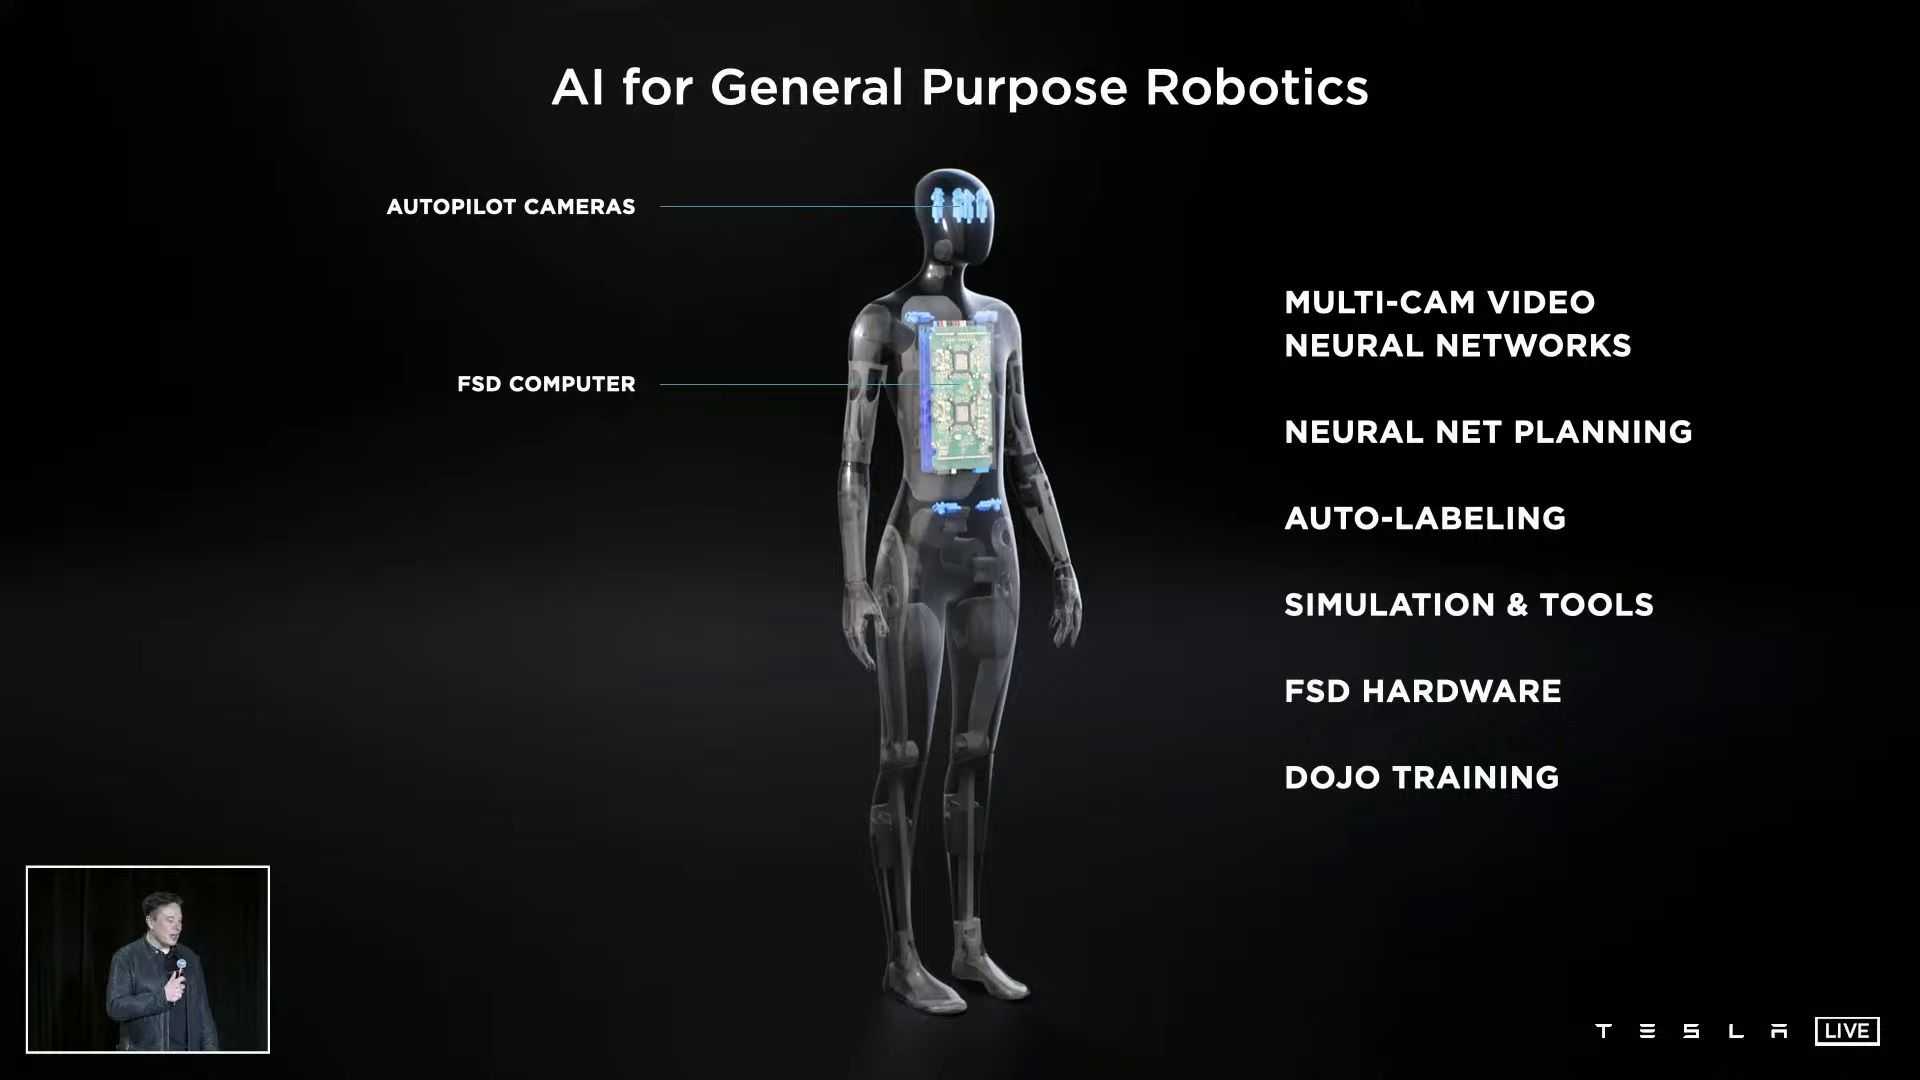 Tesla Announces Plan To Build Humanoid Tesla Bot We Can Outrun